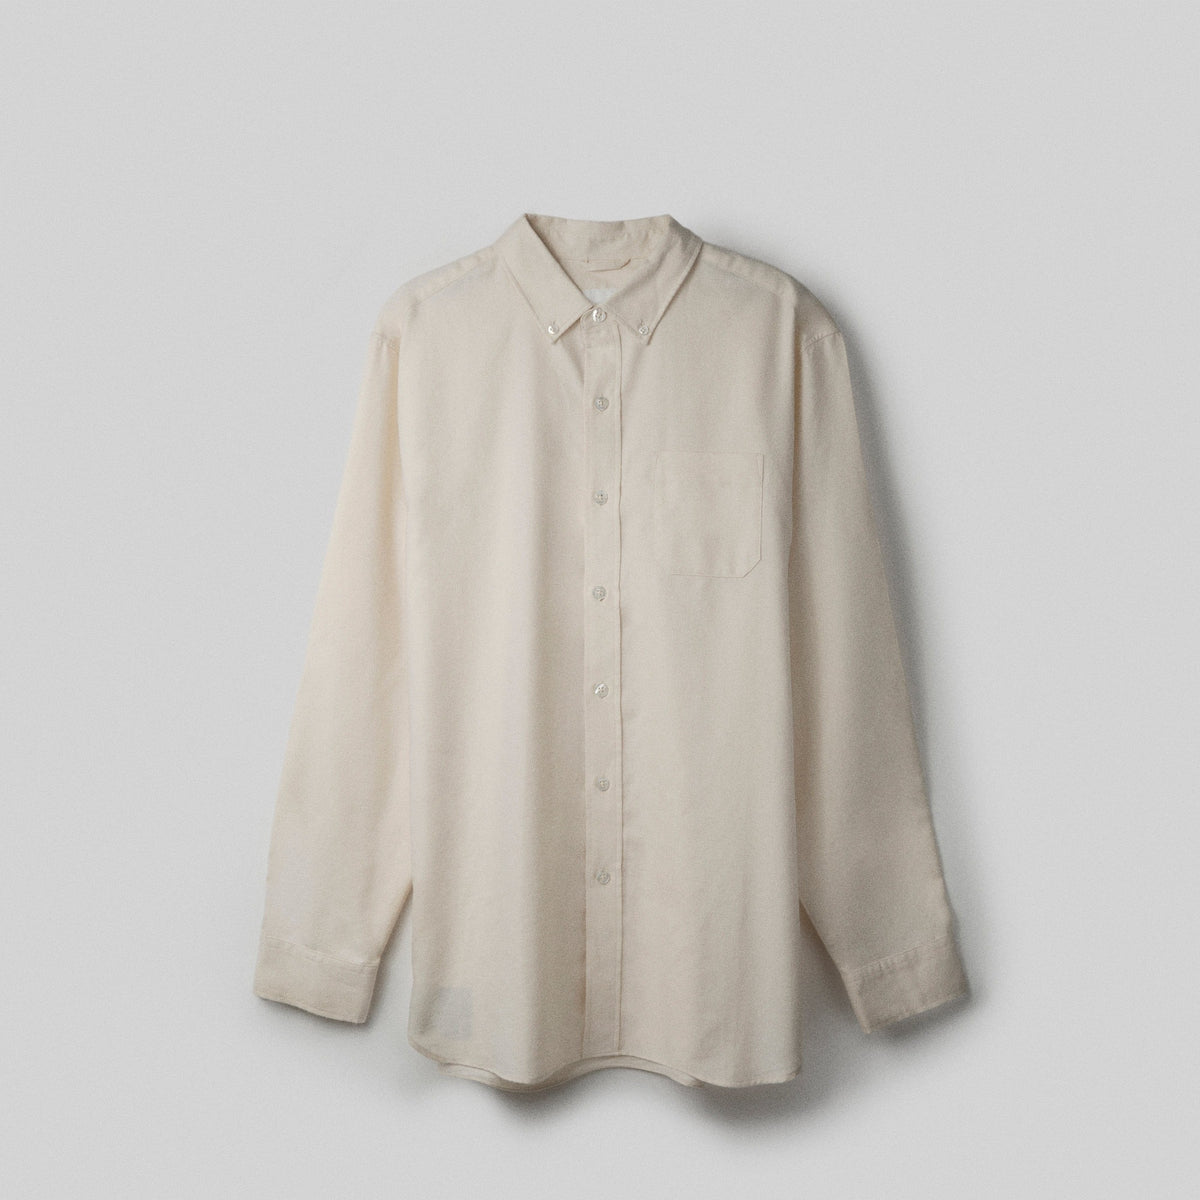 FRAHM Jacket In Stock S / Natural Ecru Classic Cotton Merino Shirt